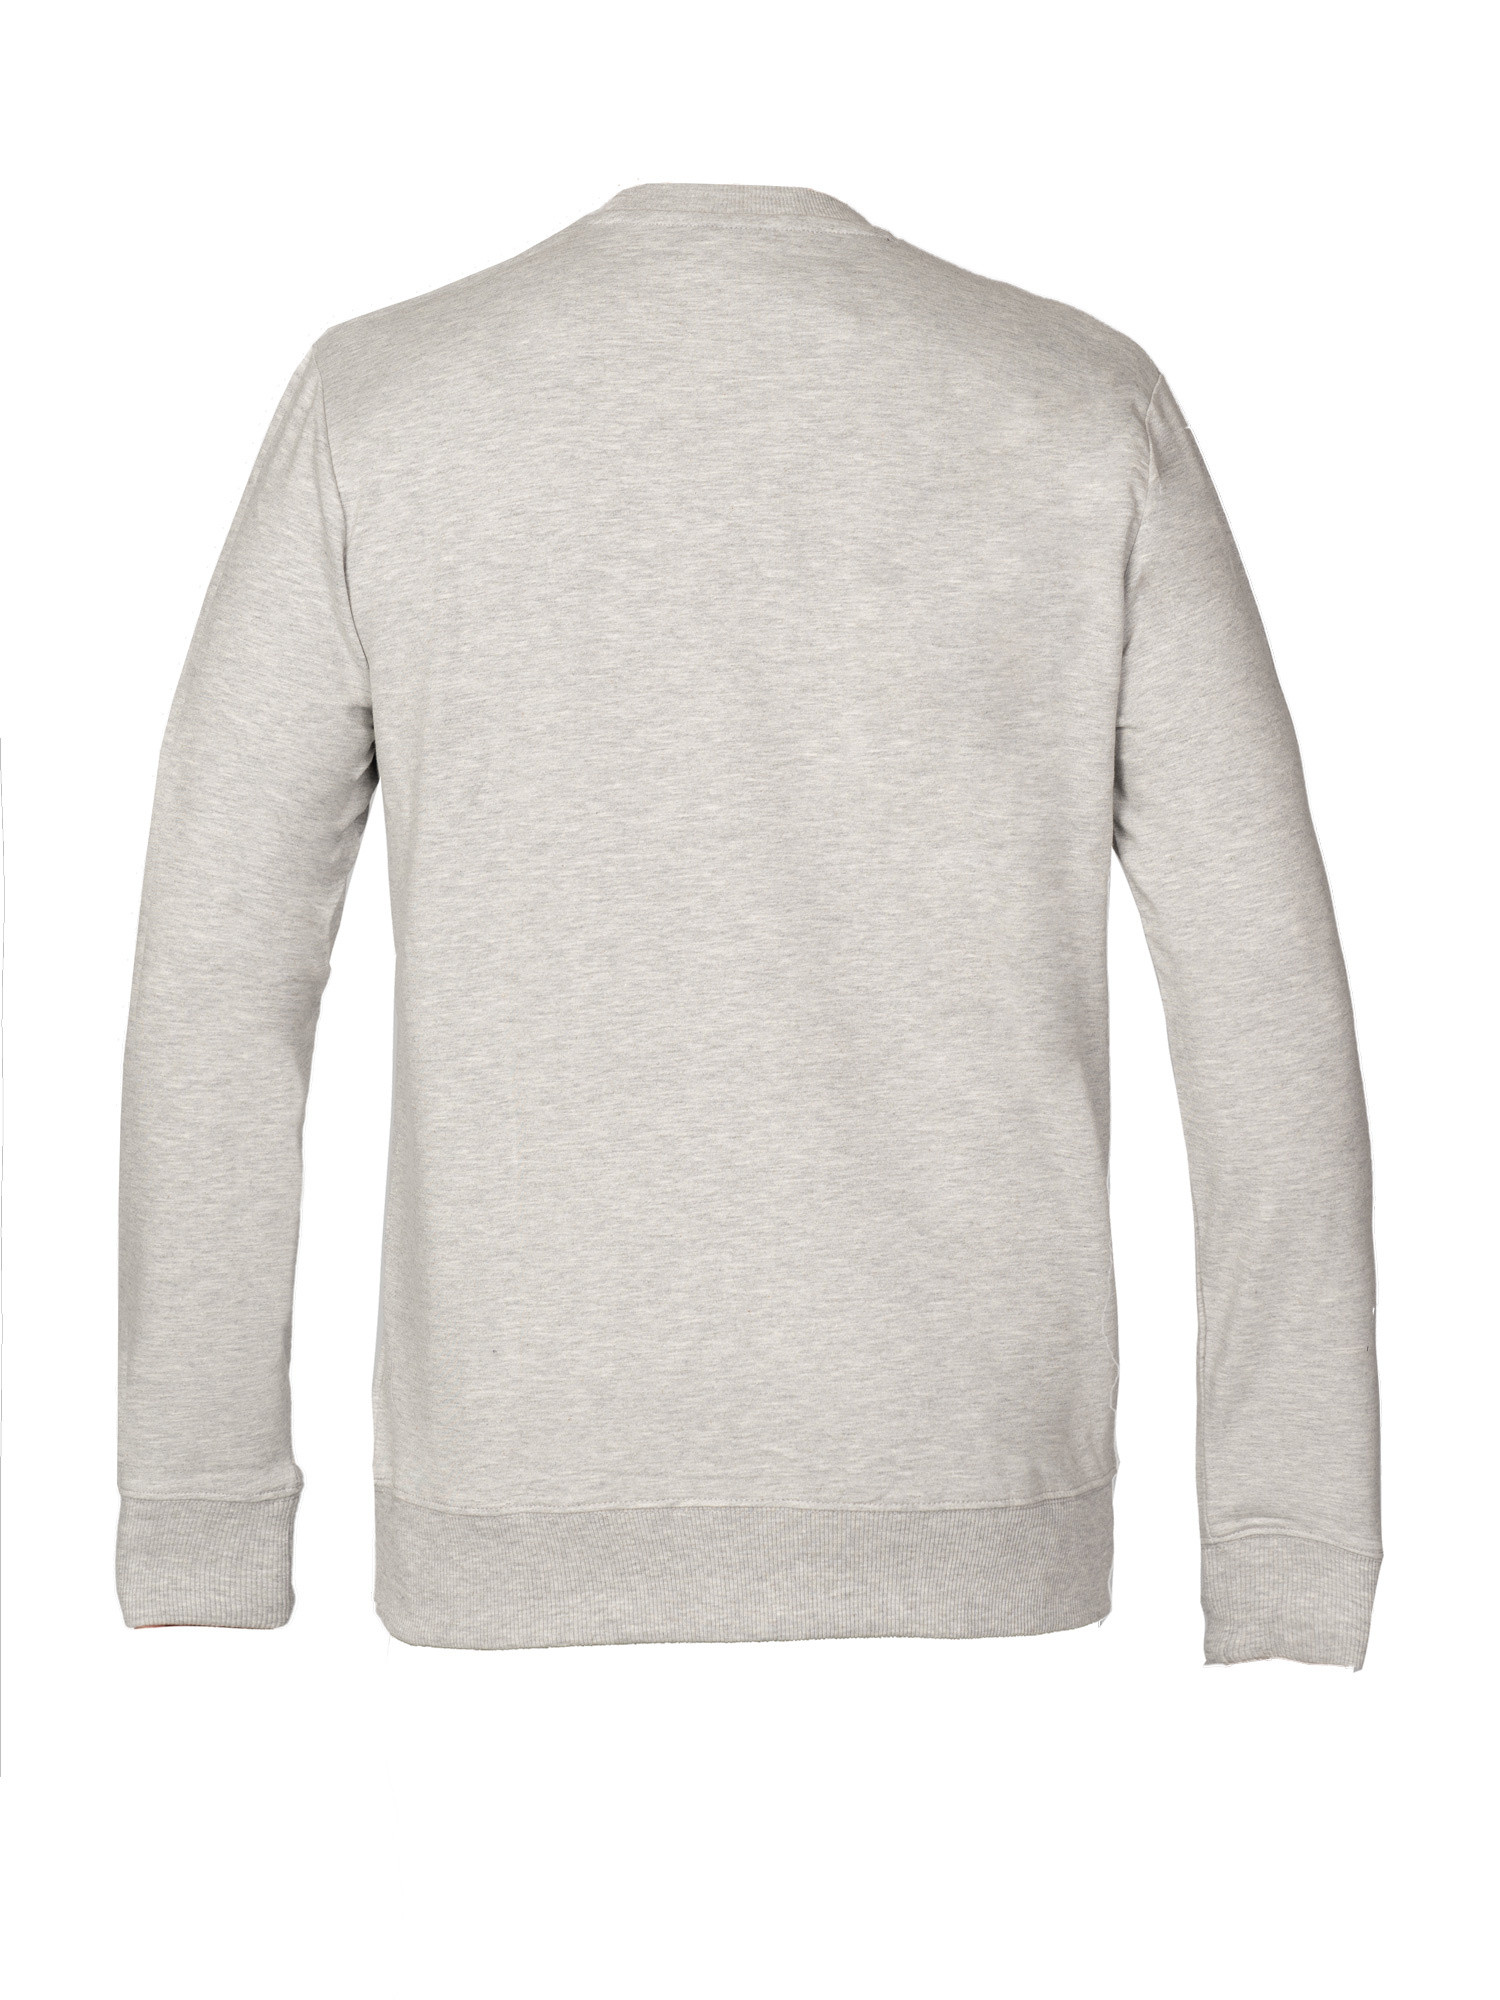 Project sweatshirt, Light Grey Melange, large image number 1